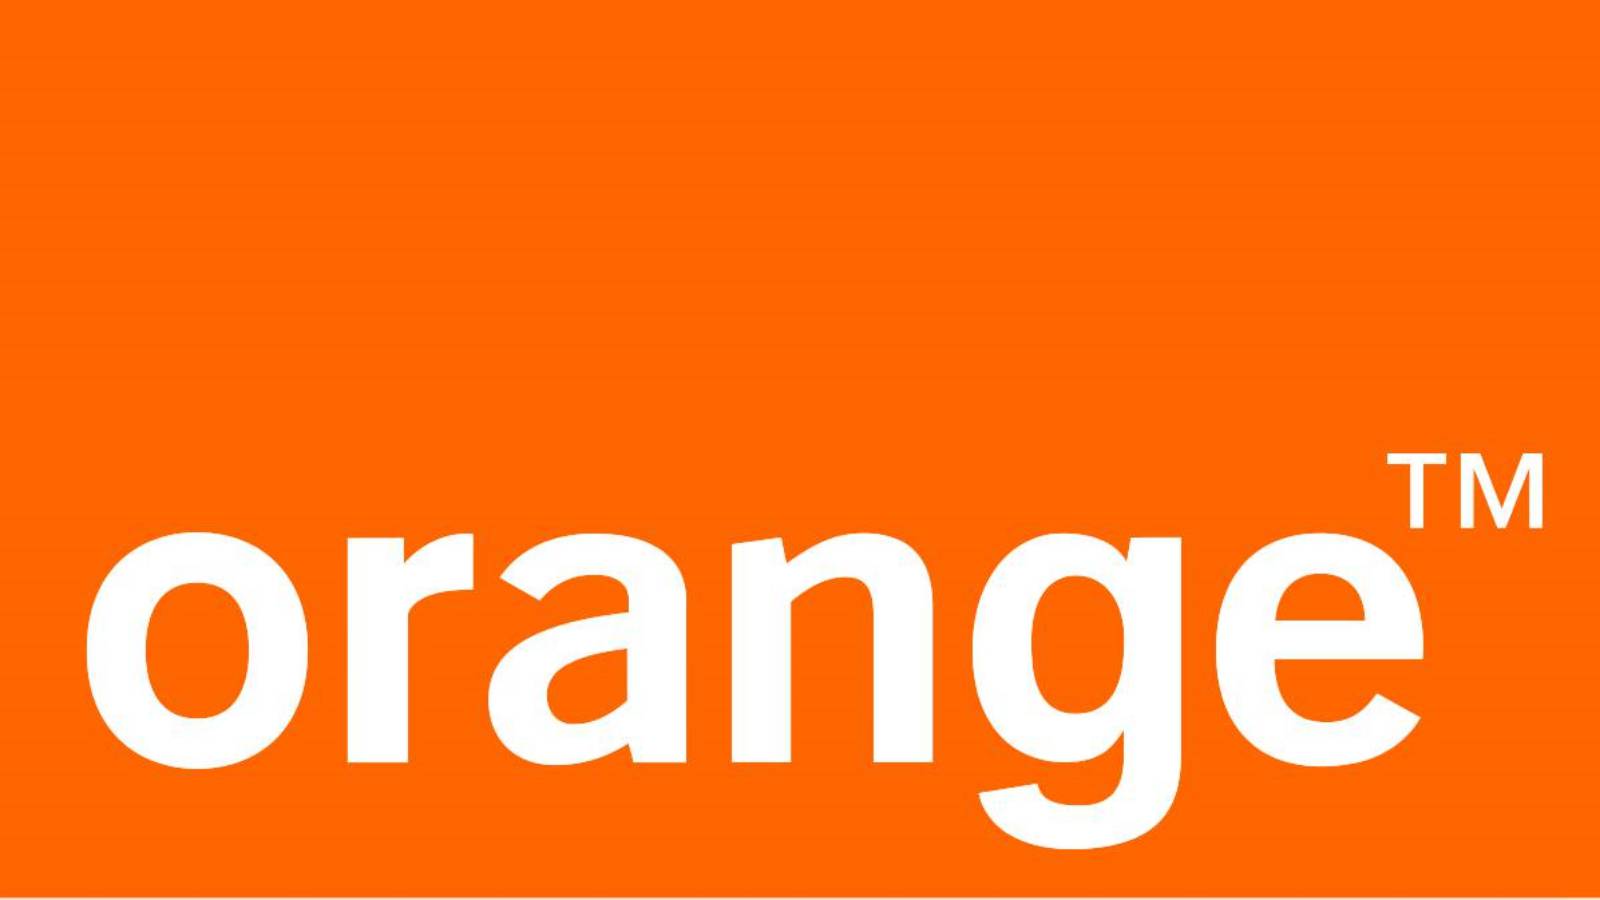 Orange AVERTIZEAZA Milioanele Clienti Romania Trebuie Stii